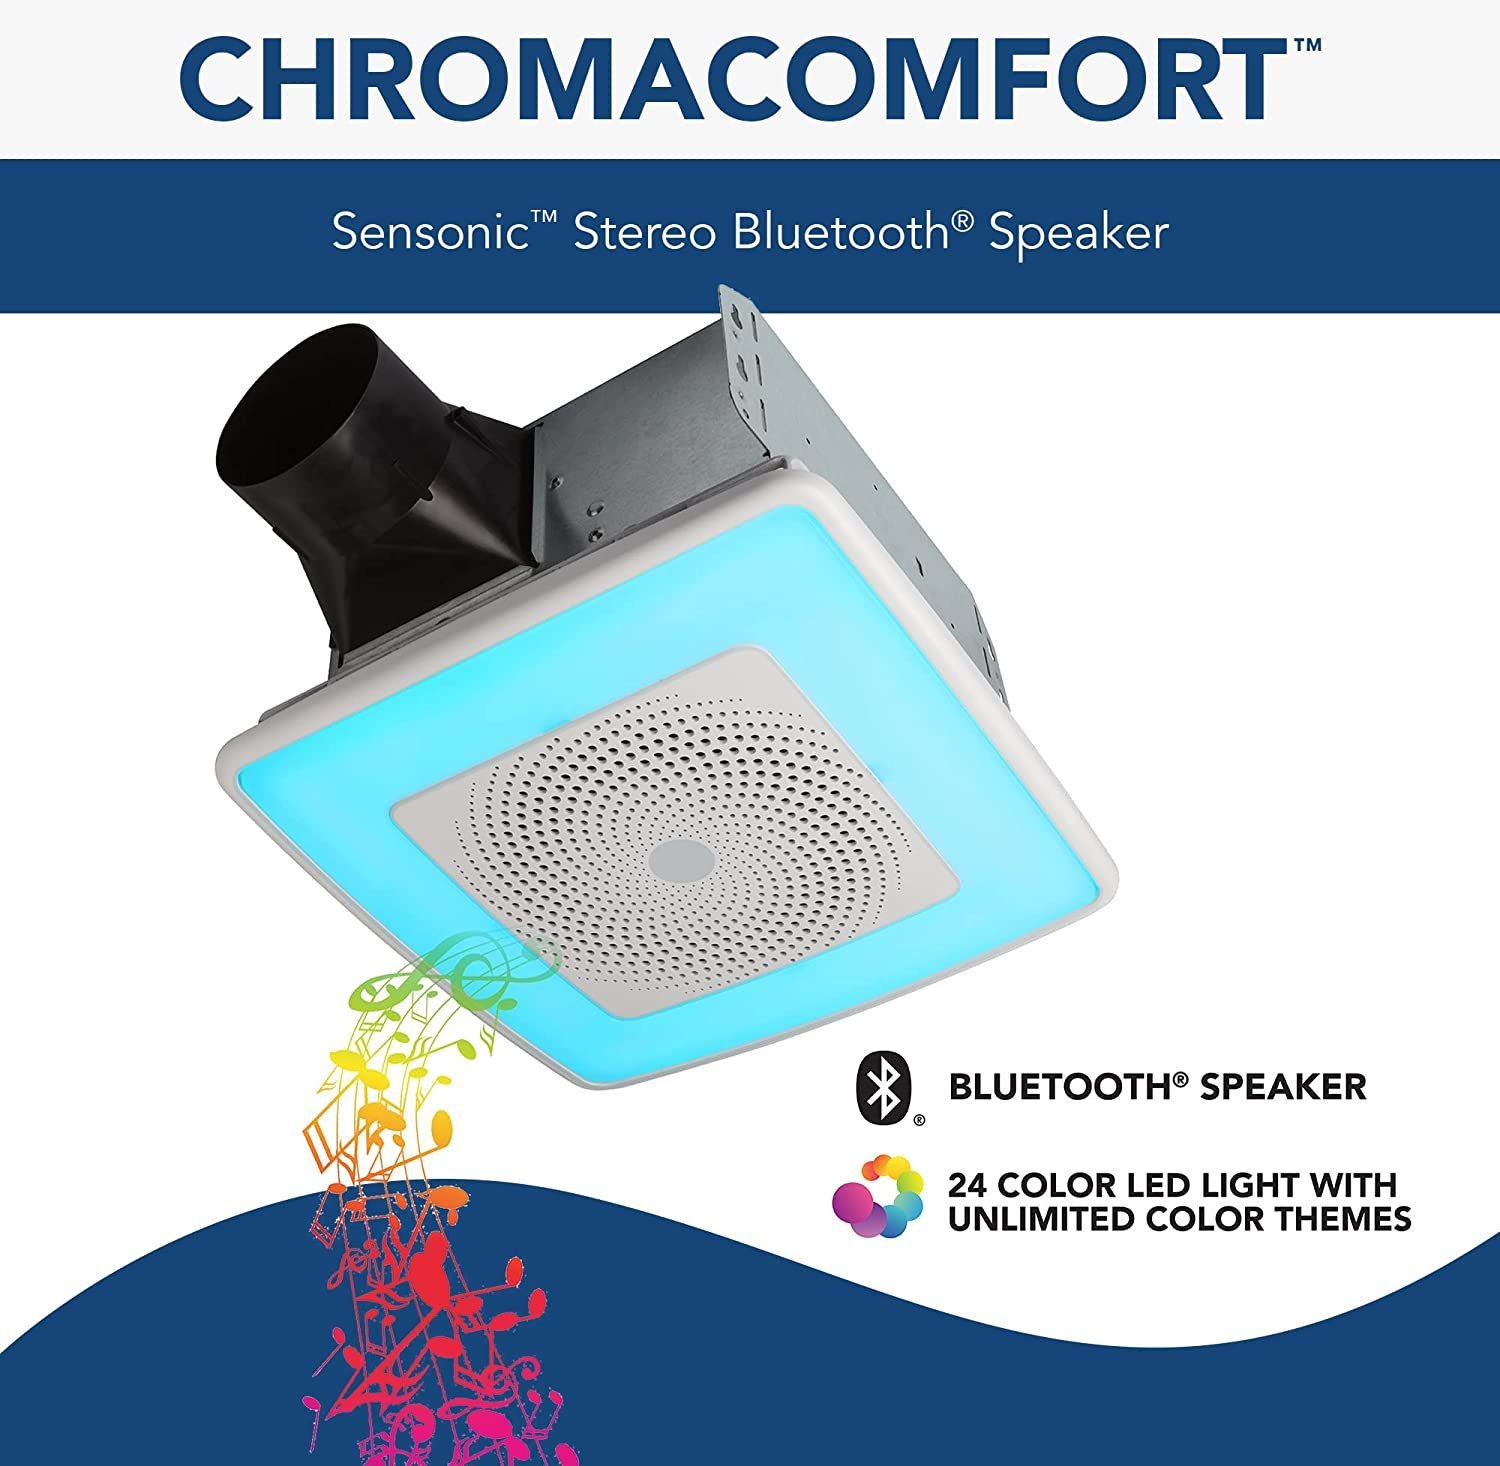 Broan-NuTone ChromaComfort Bathroom Exhaust Fan with Sensonic Bluetooth Speaker and LED Light